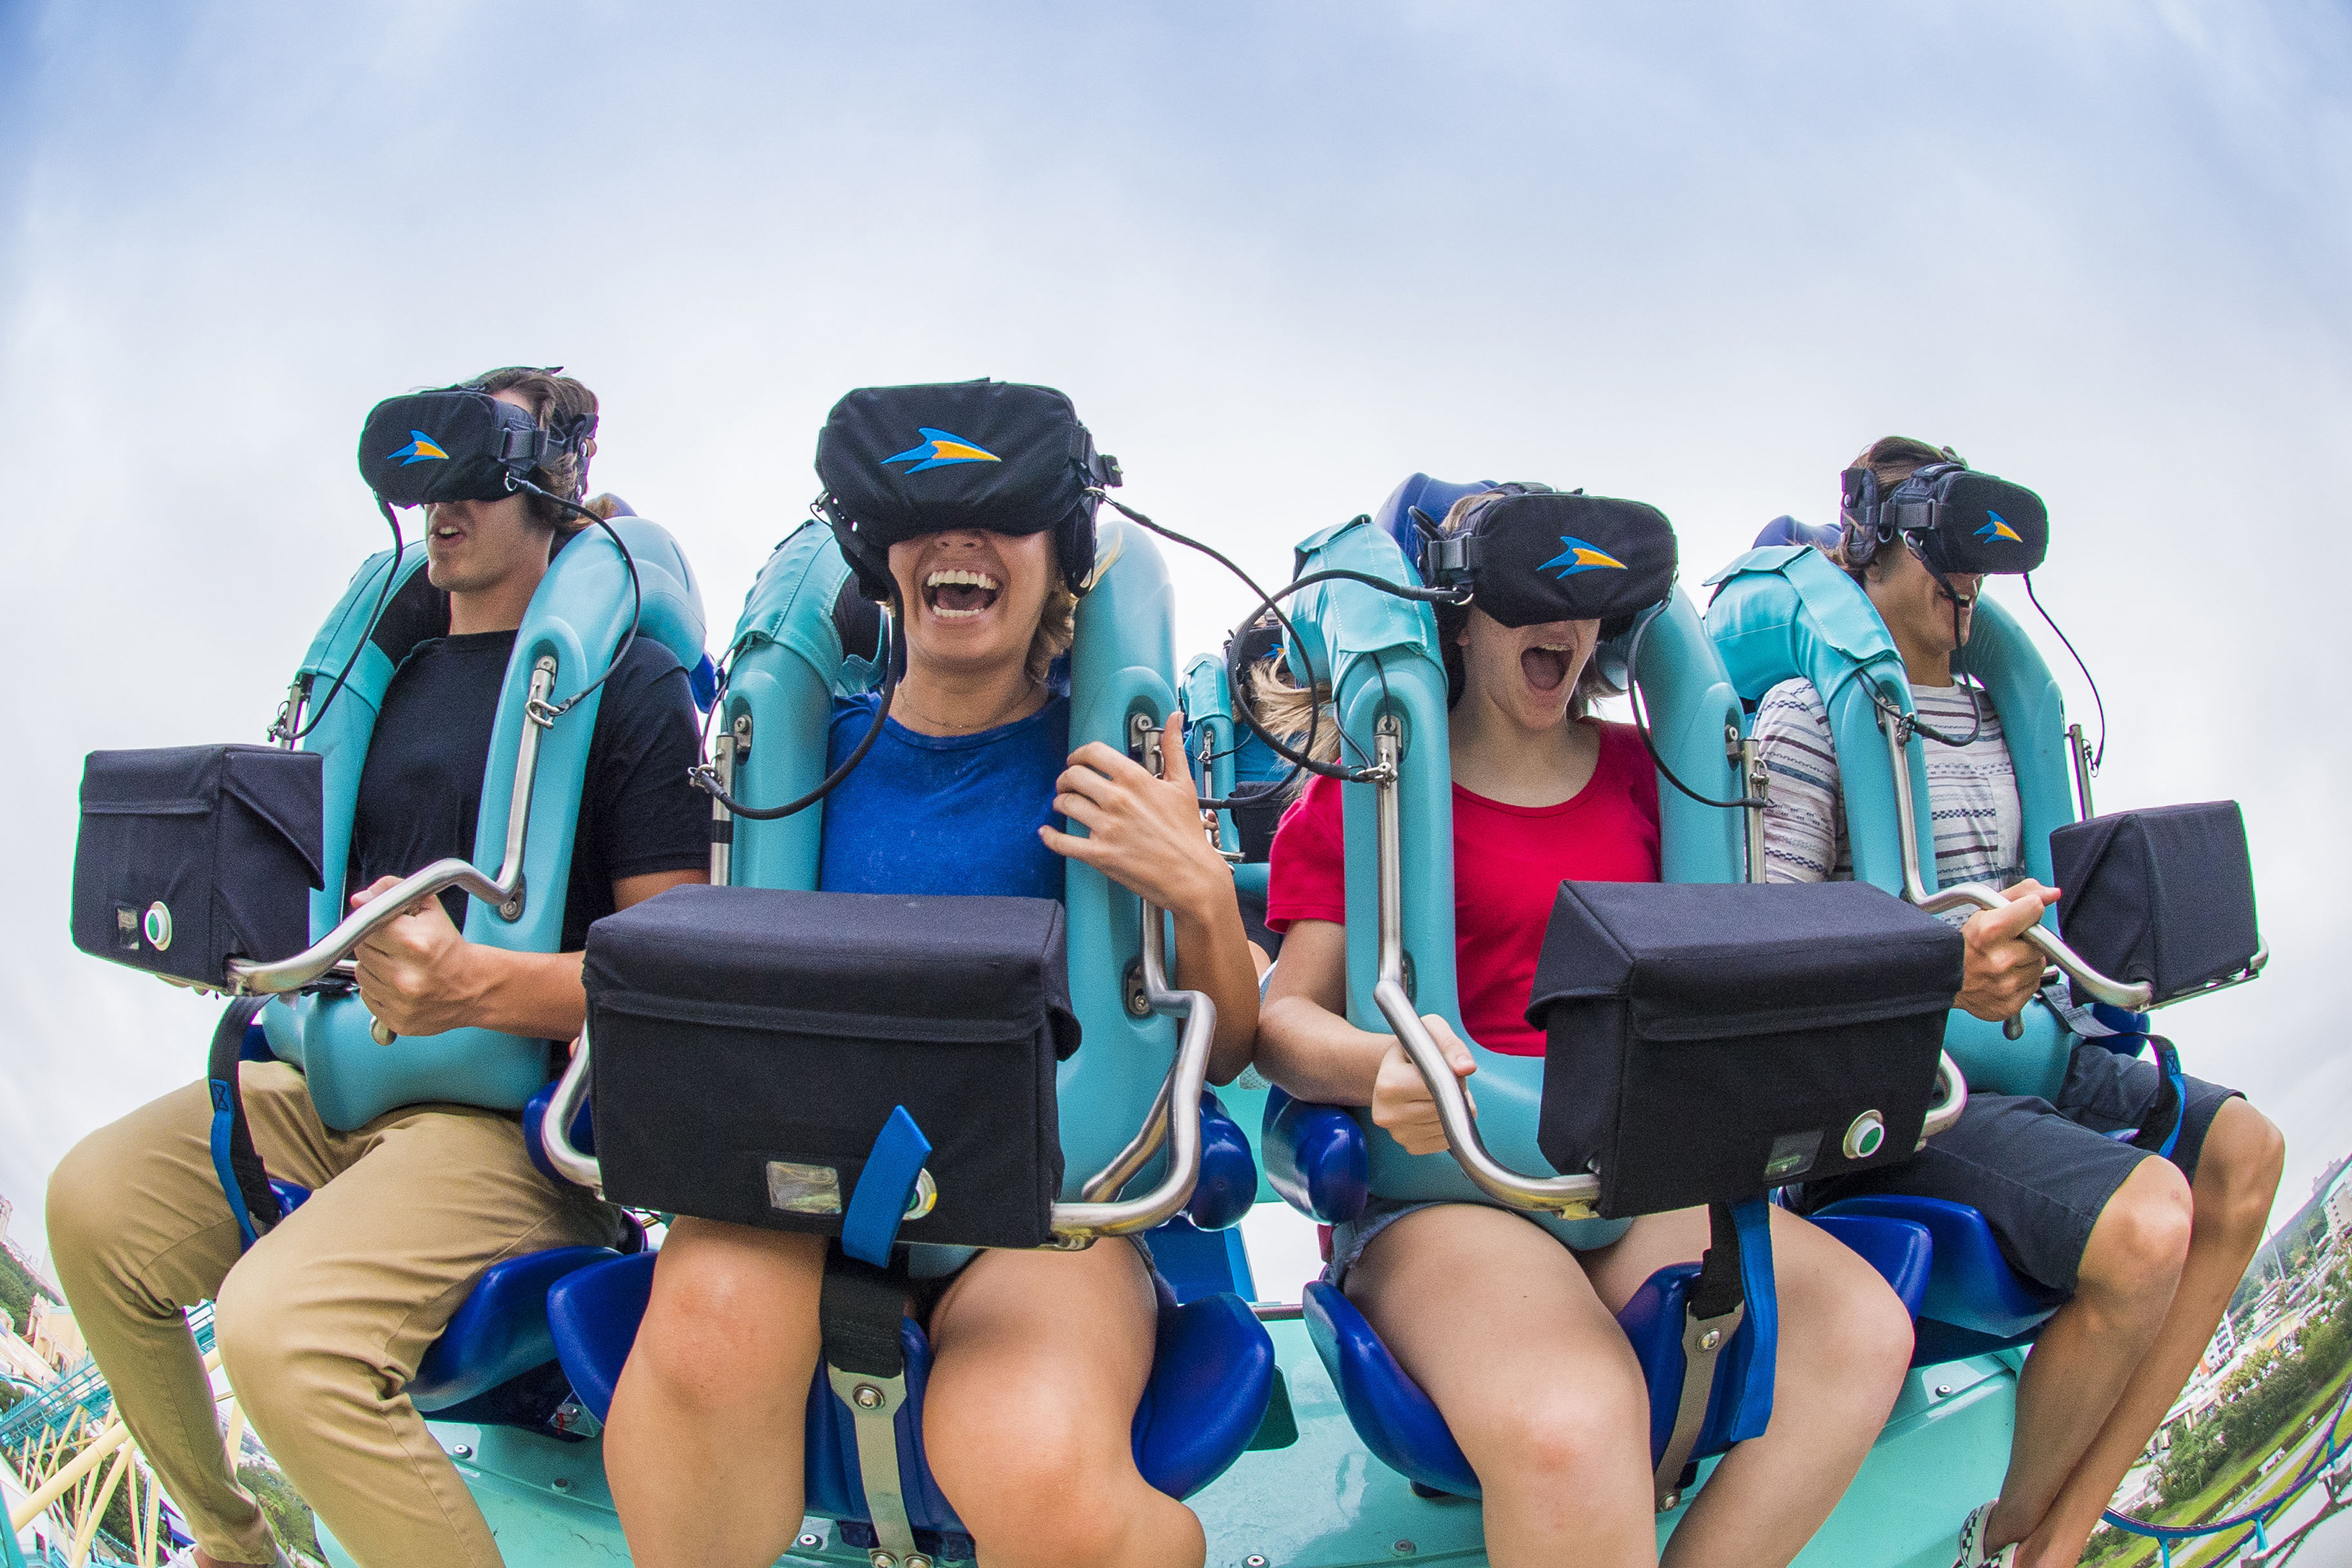 SeaWorld Orlando unveils virtual reality roller coaster